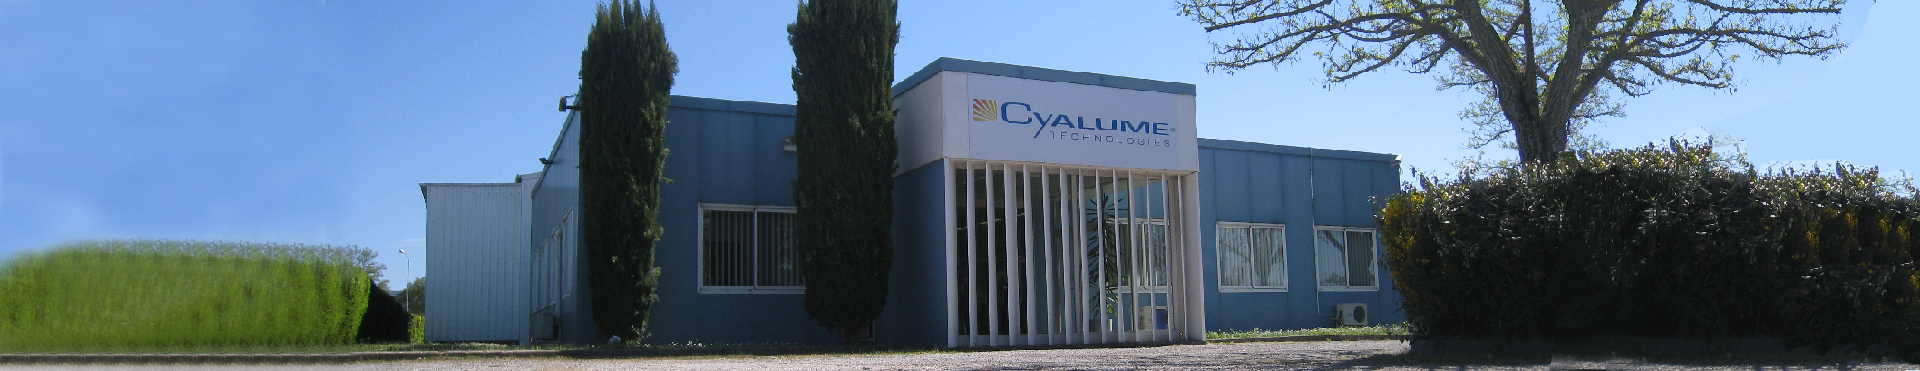 Cyalume Technologies SAS